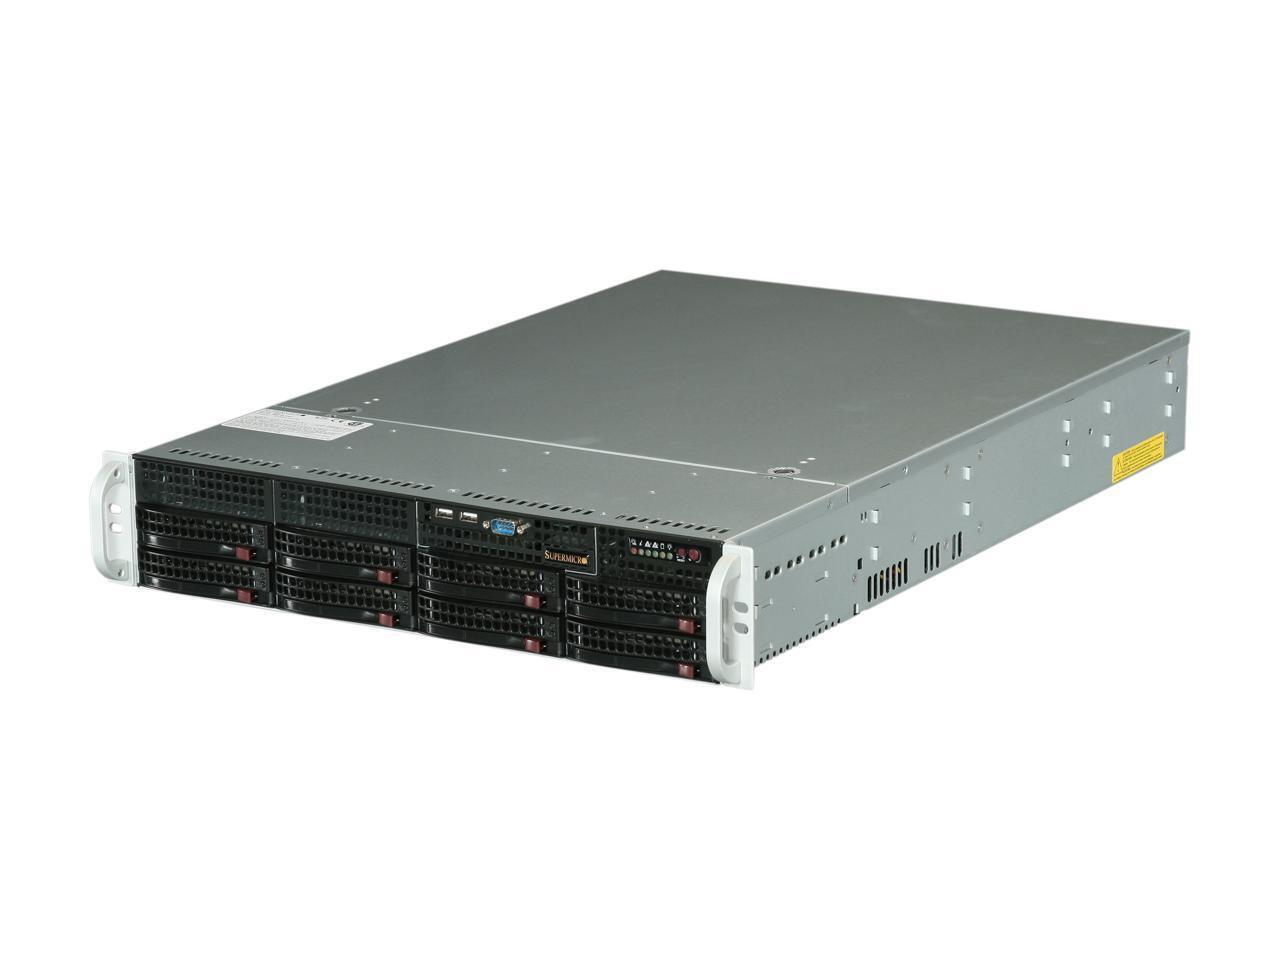 Supermicro SYS-6027R-TRF Barebones Server X9DRi-F NEW IN STOCK 5 Year Warranty